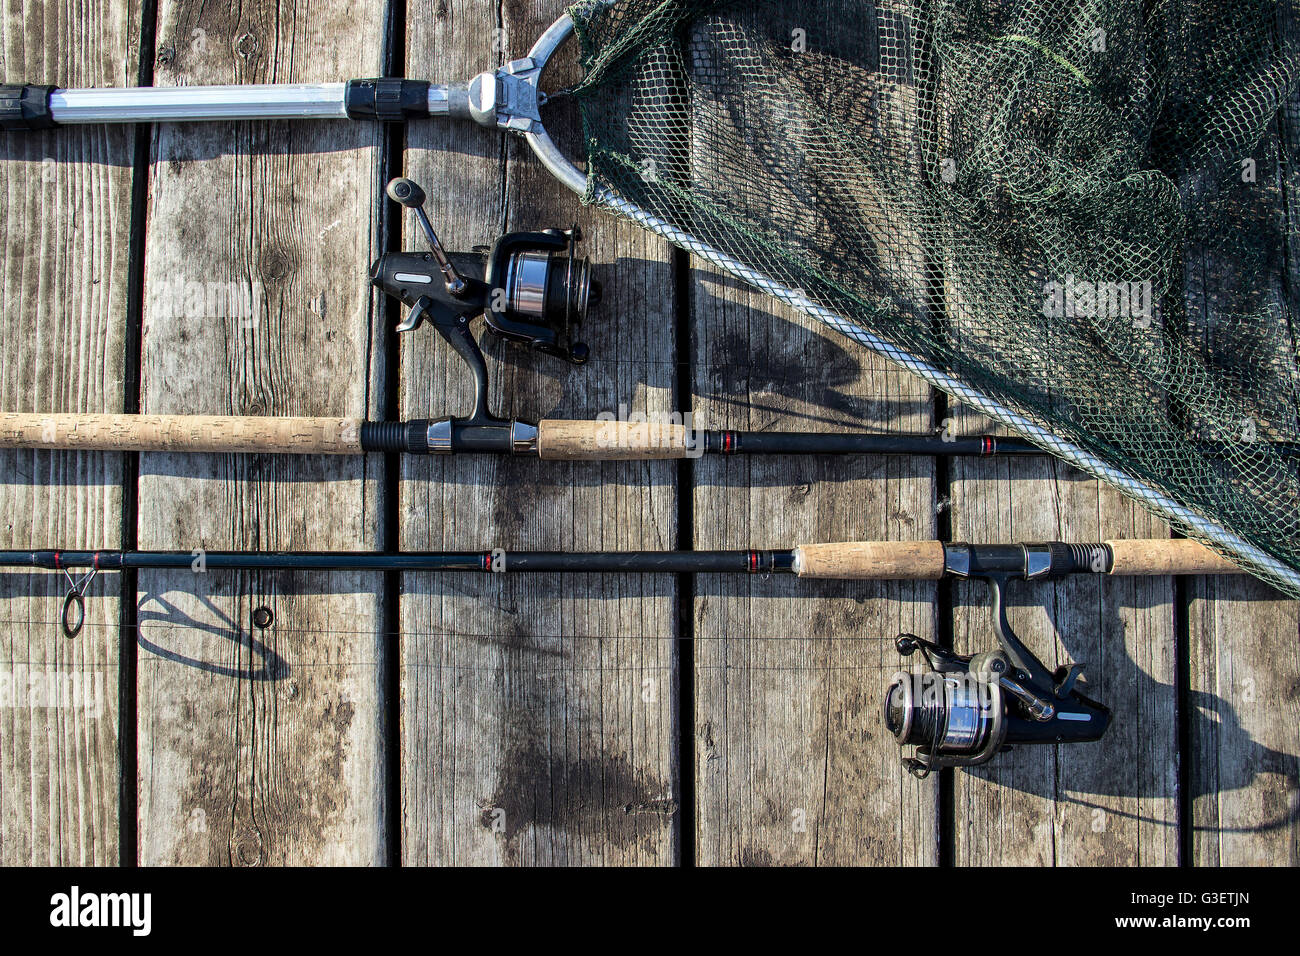 Accesorios de red de pesca fotografías e imágenes de alta resolución - Alamy